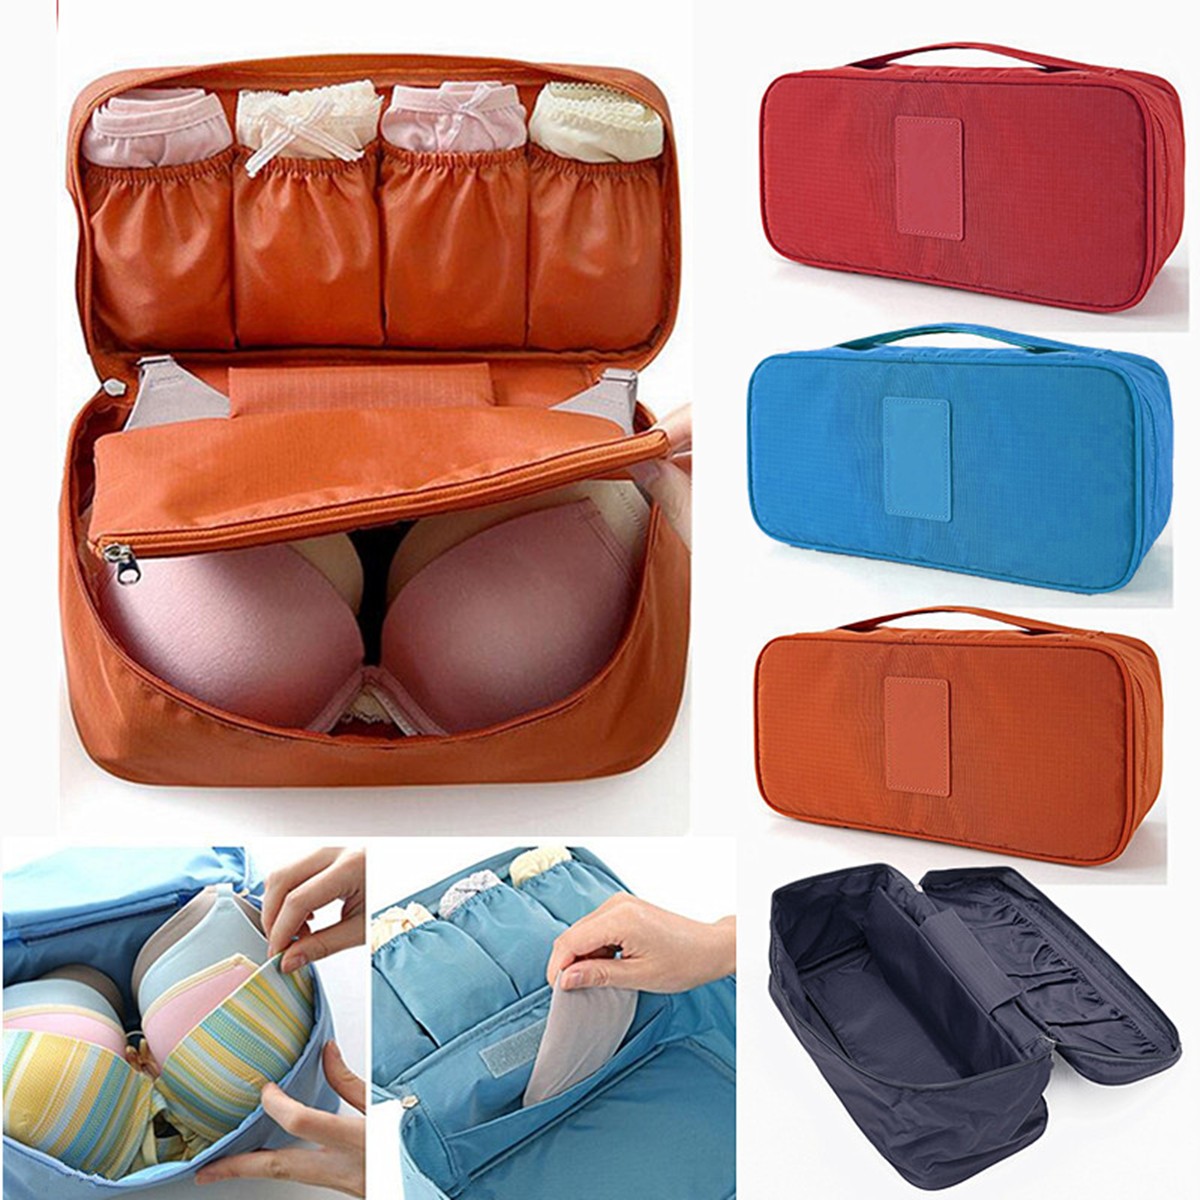 Portable-Protect-Bra-Underwear-Socks-Cosmetic-Packing-Cube-Storage-Bag-Travel-Luggage-Organizer-1115379-1